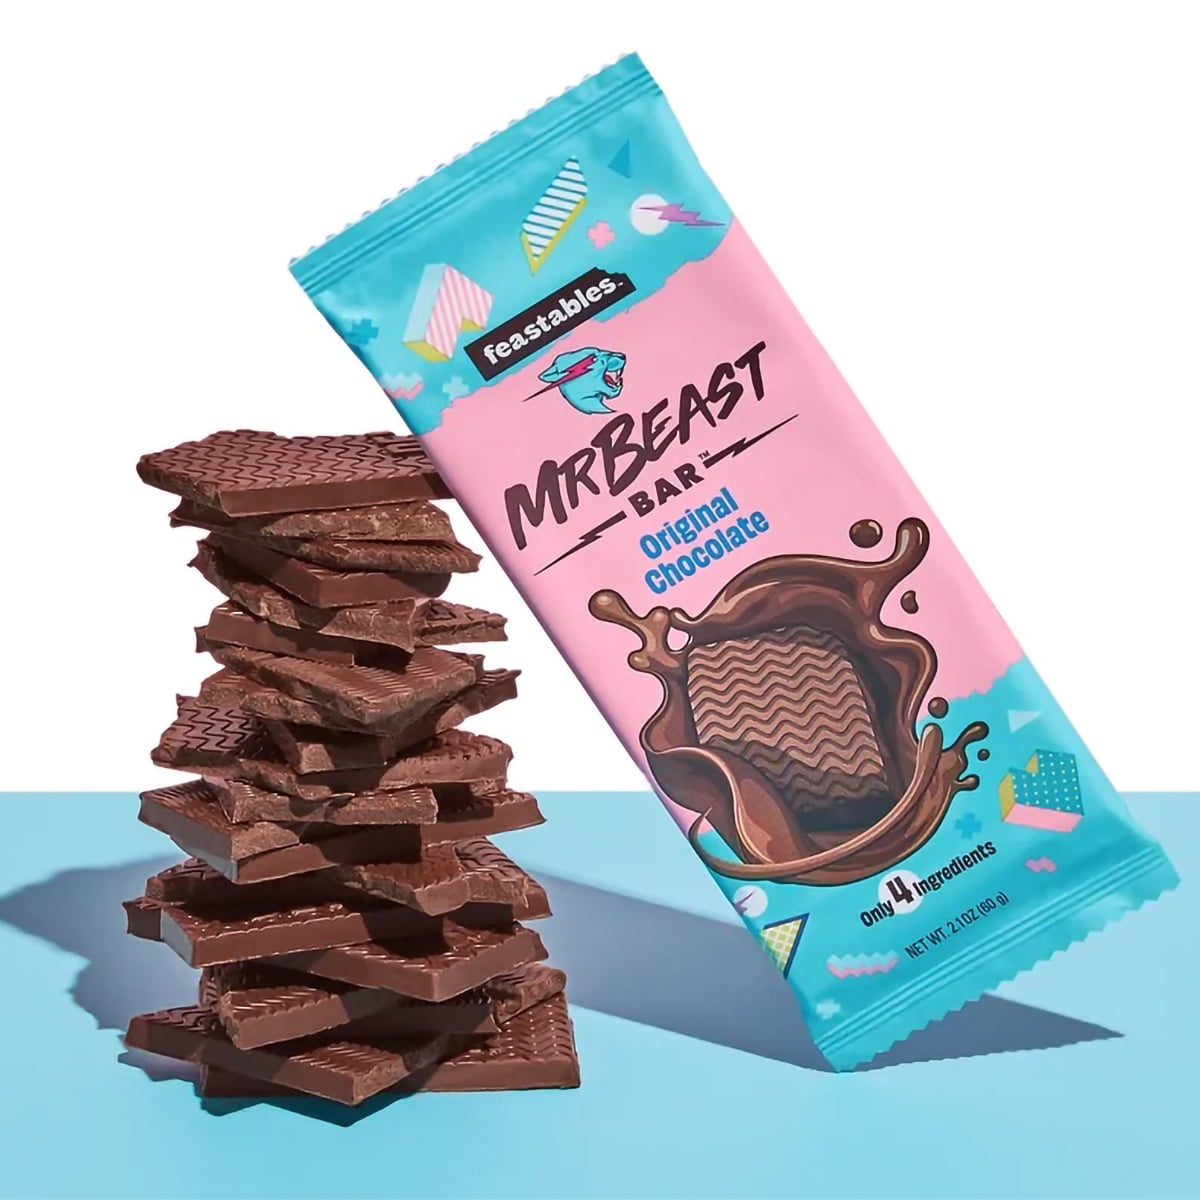 Mr Beast Original Chocolate - Try the Intense MrBeast Chocolate